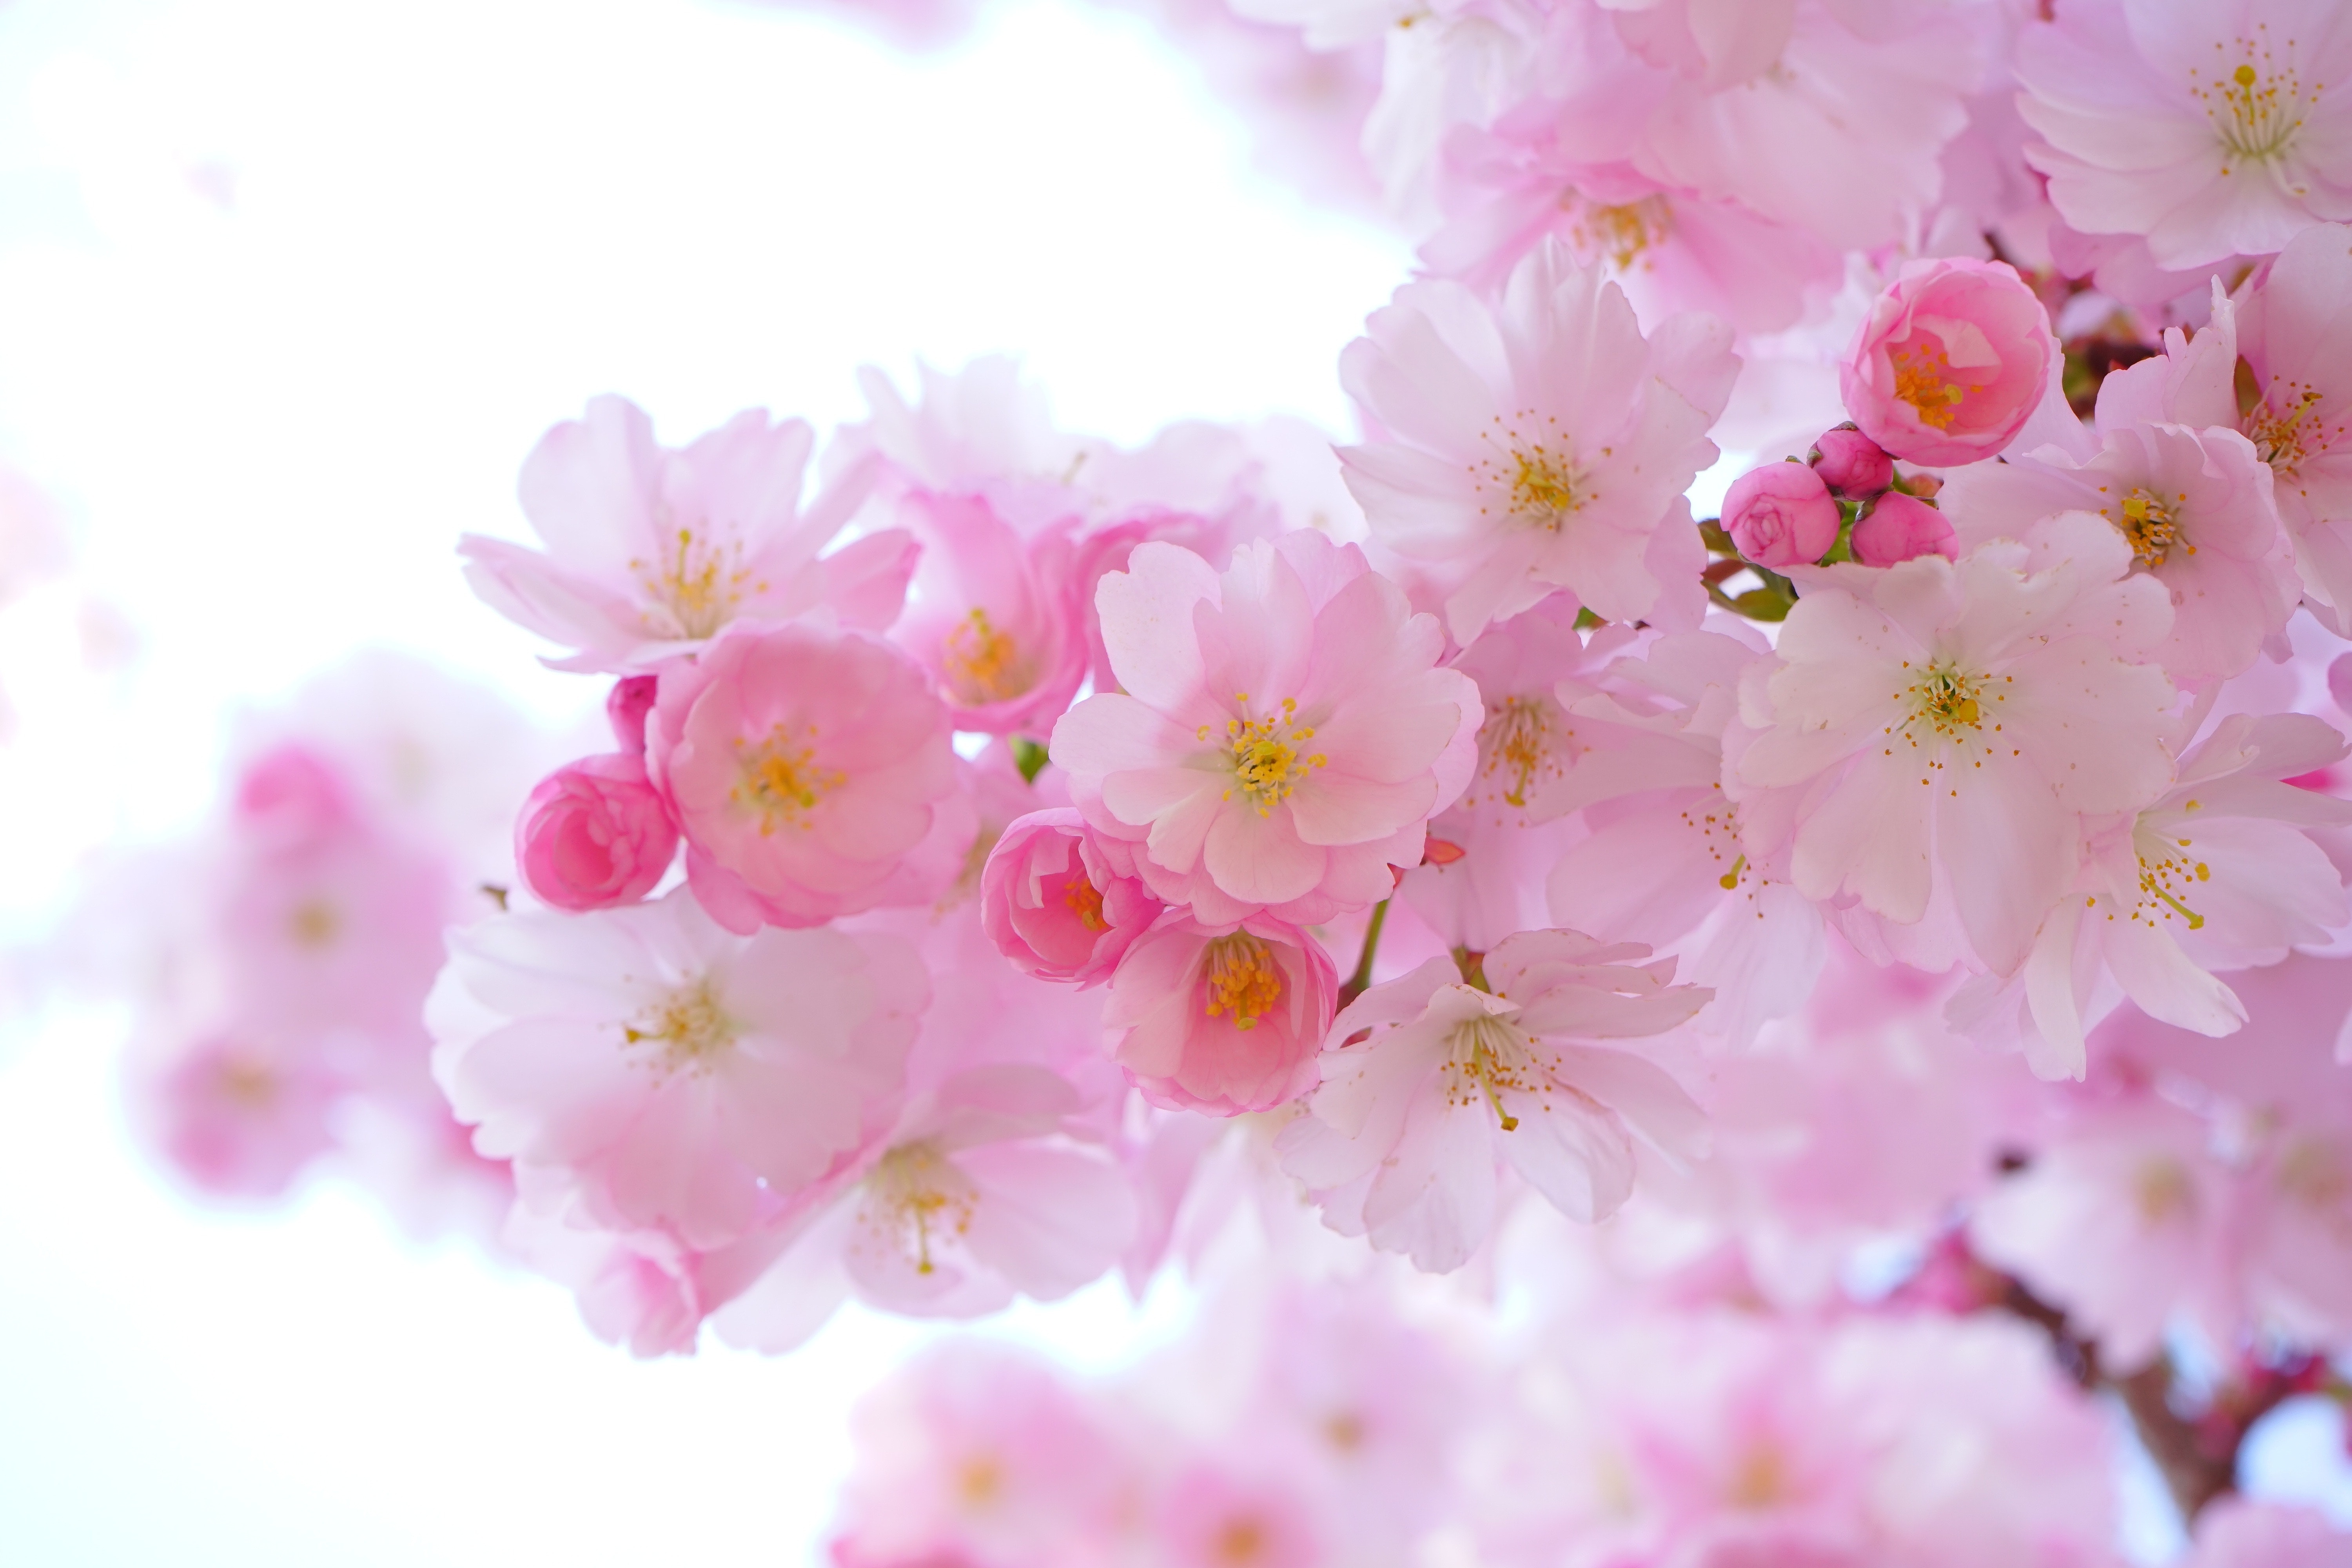 1000+ Interesting Pink Flowers Photos · Pexels · Free Stock Photos